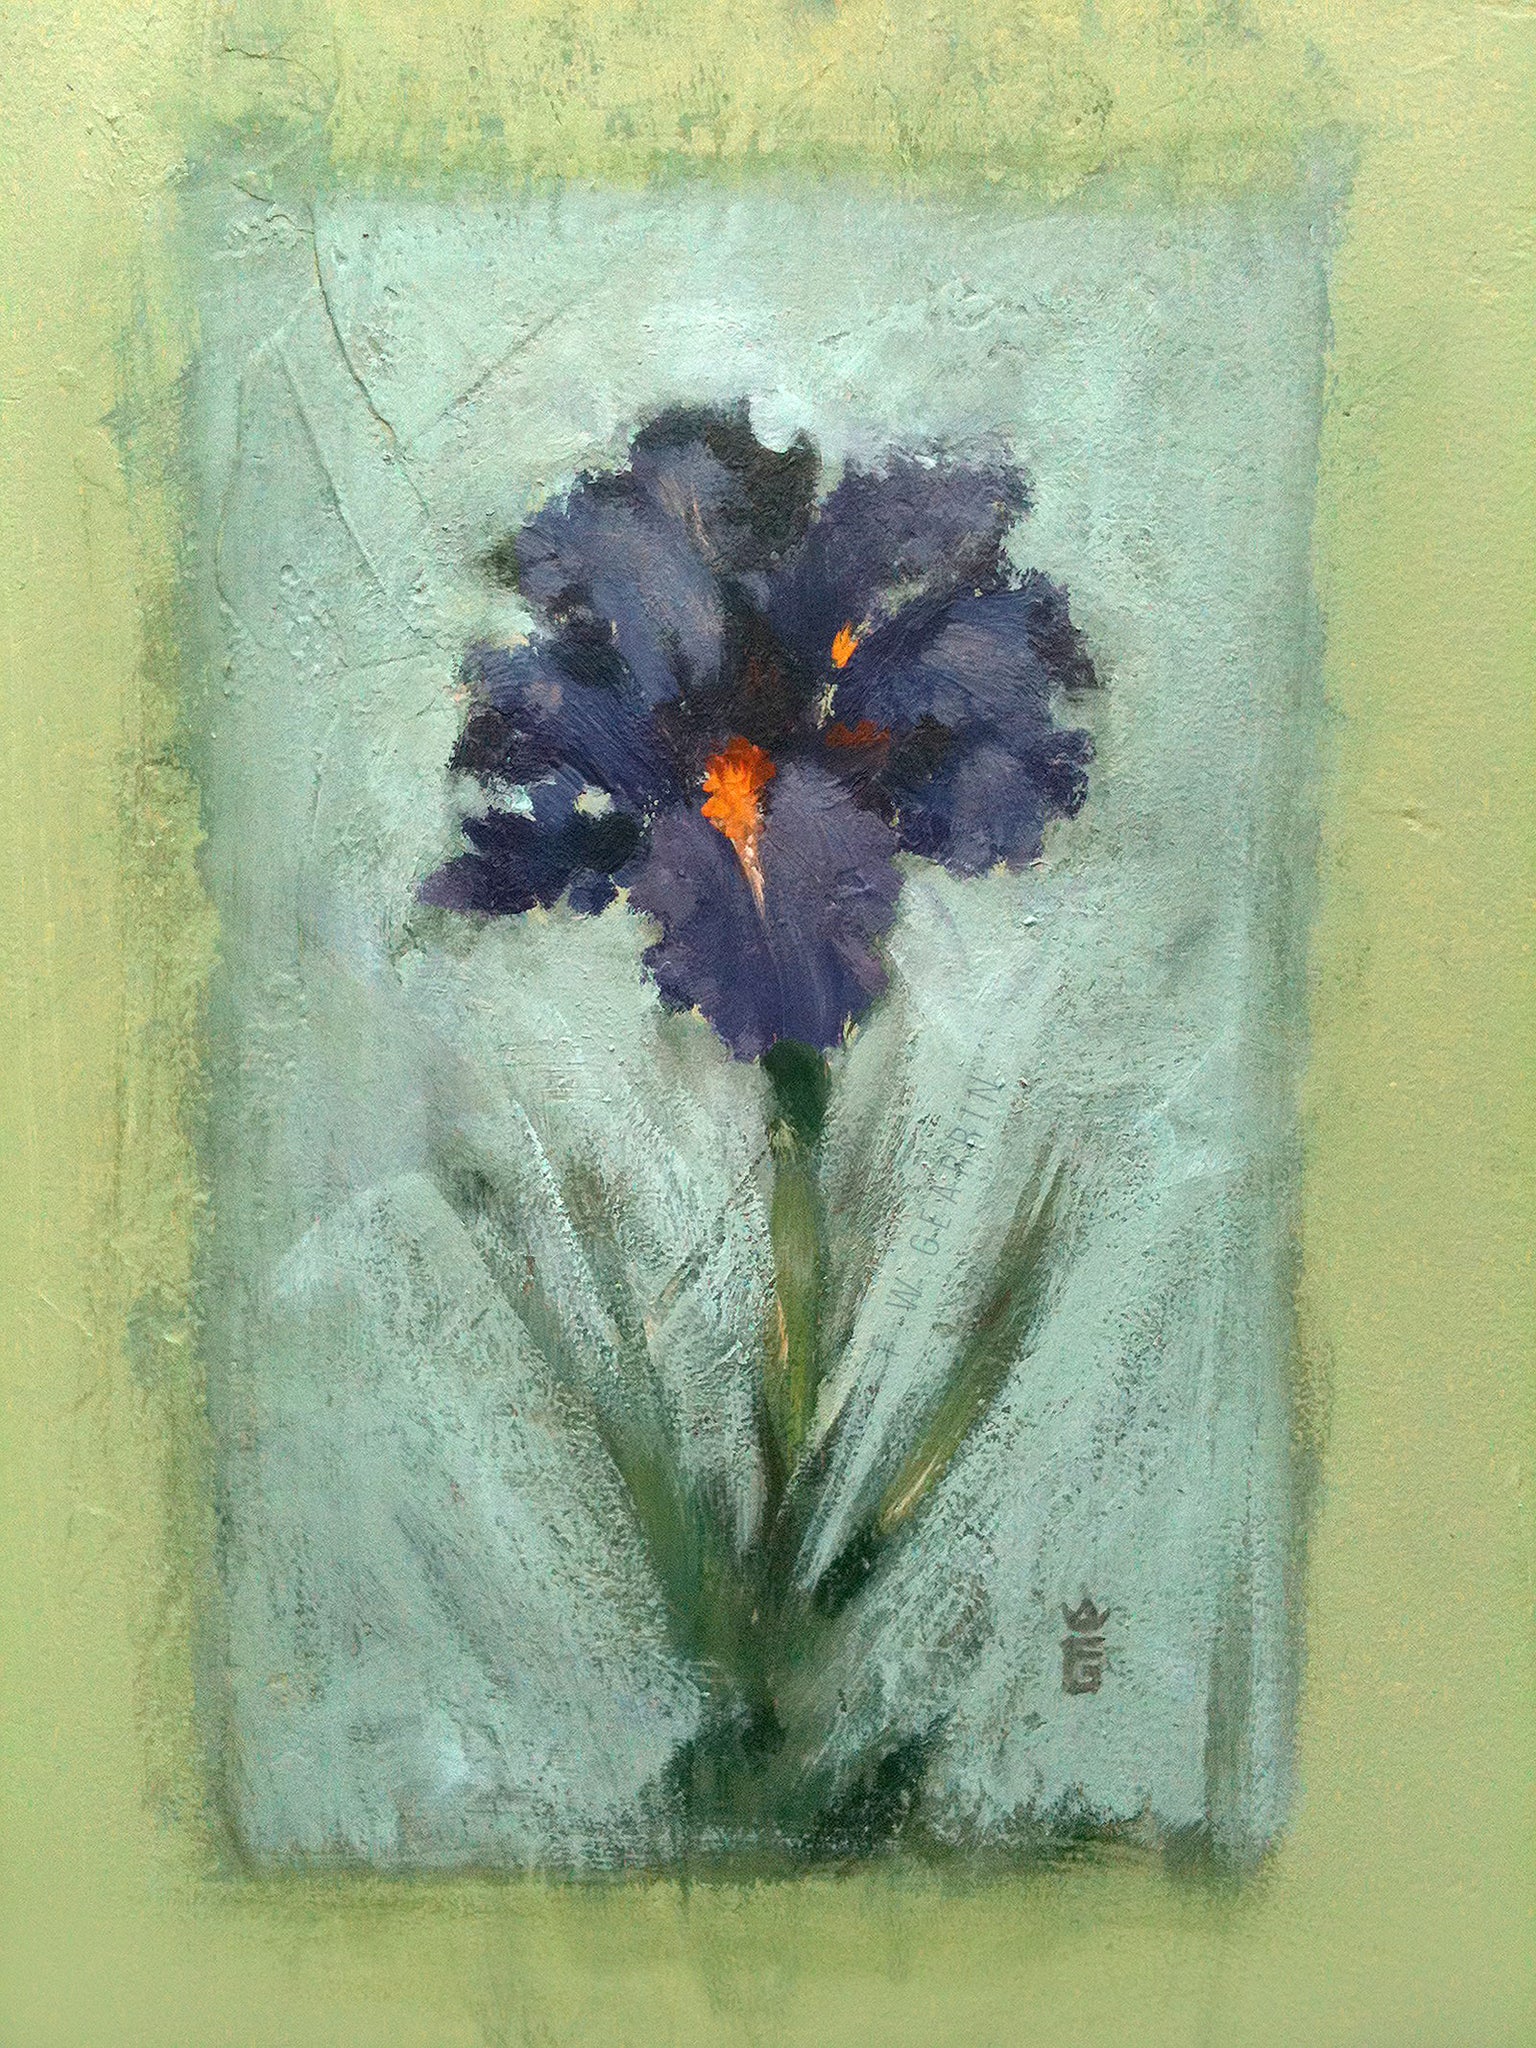 Iris for Acey - Framed Canvas Print